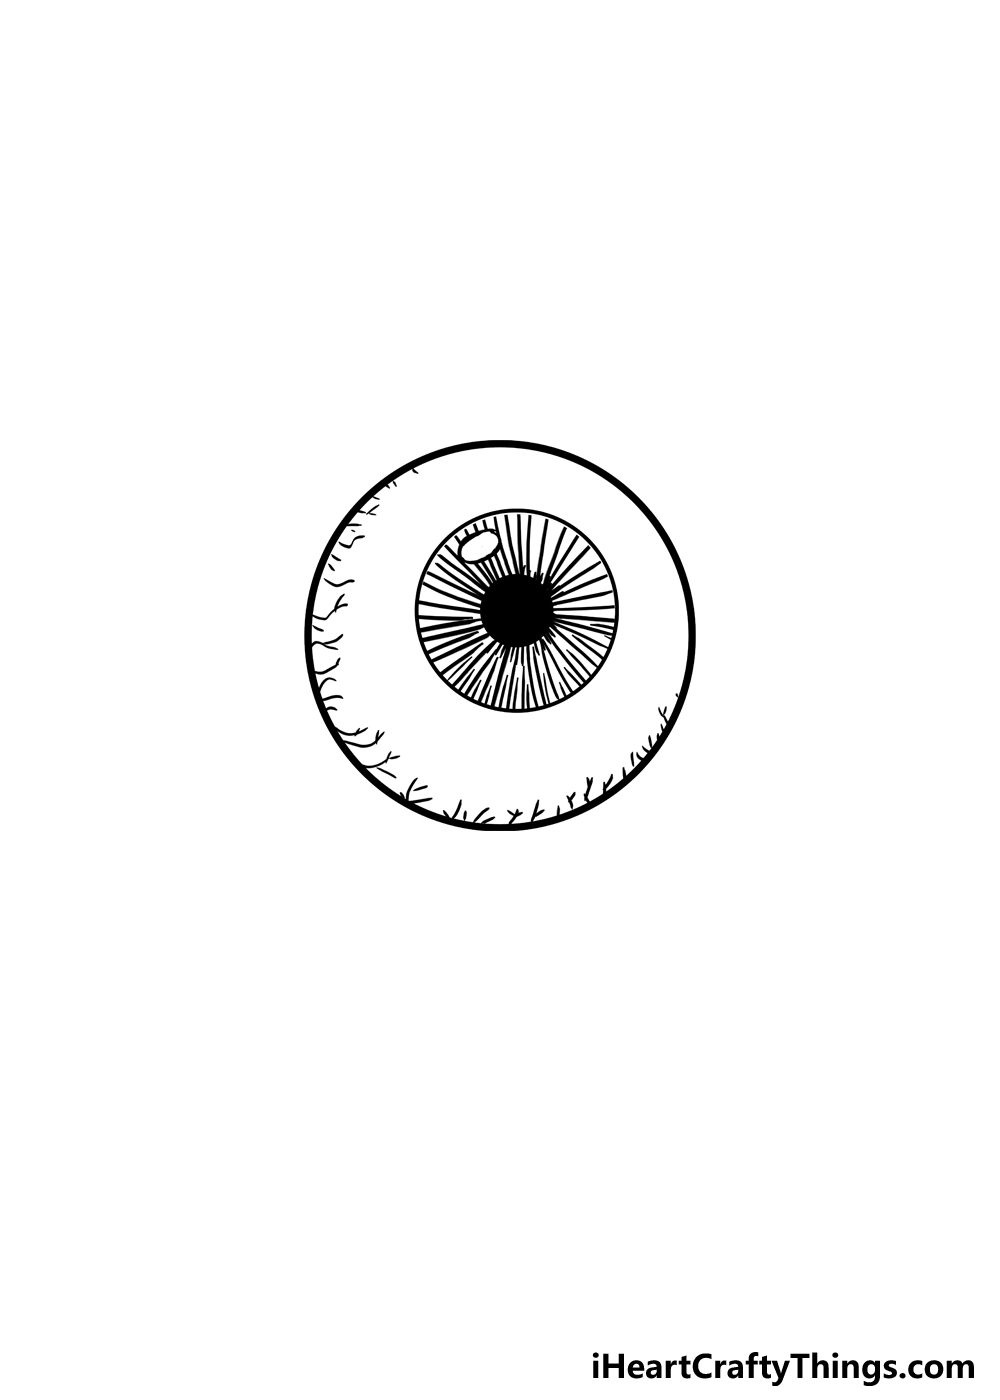 How to Draw An Eyeball step 5